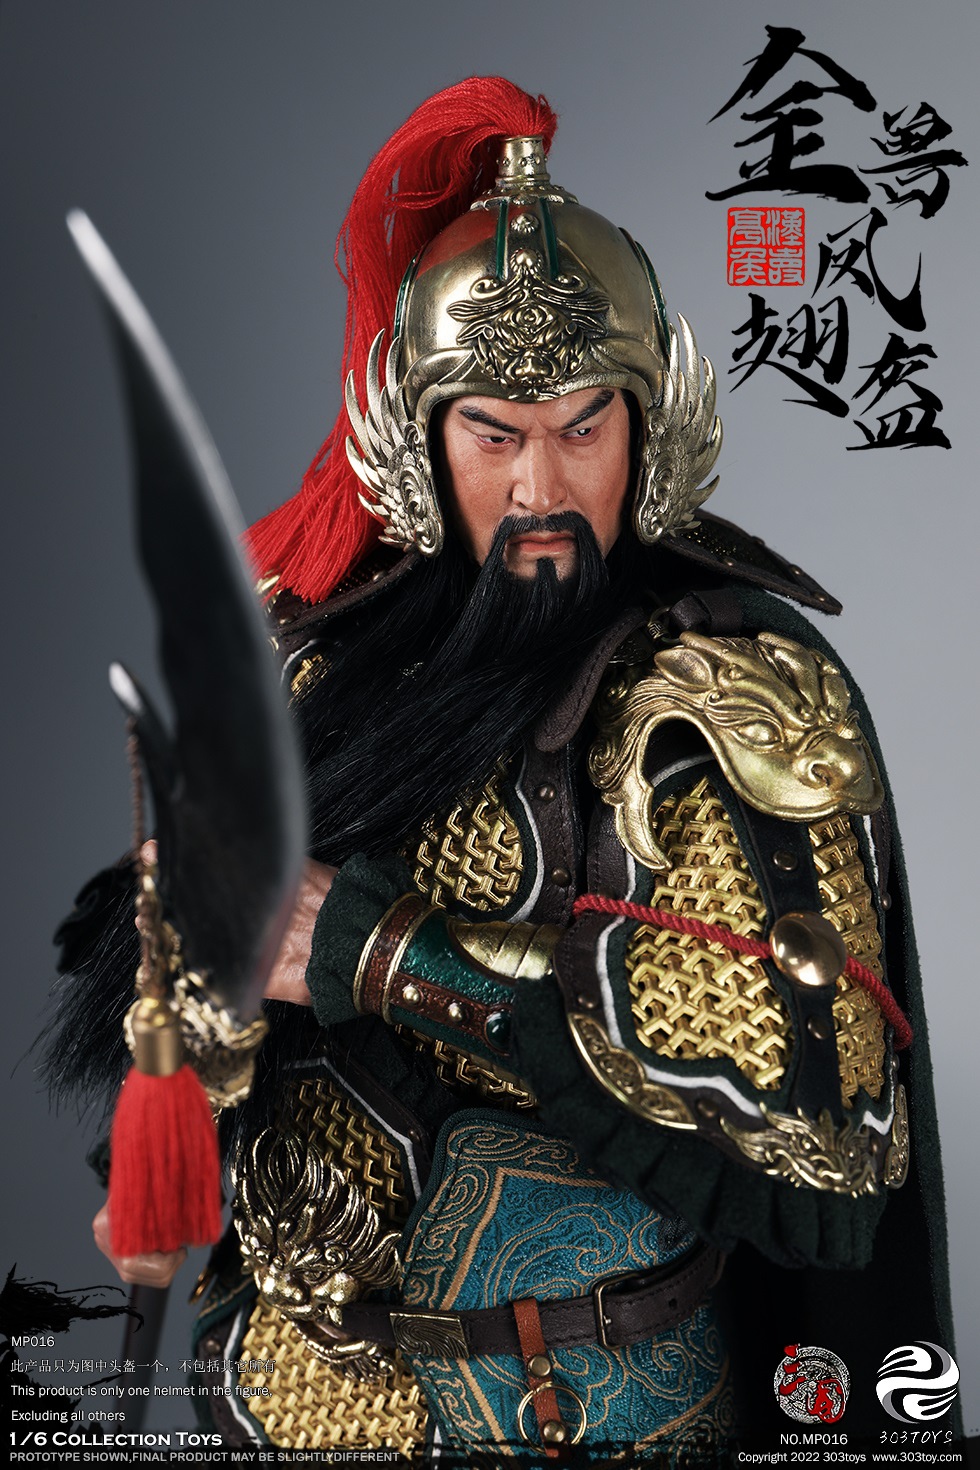 303TOYS - NEW PRODUCT: 303TOYS: 1/6 Three Kingdoms Series - Zhang Feiyi de [pure copper edition] dark cloud snow war horse, phoenix wing helmet #MP013/MP014 15193311